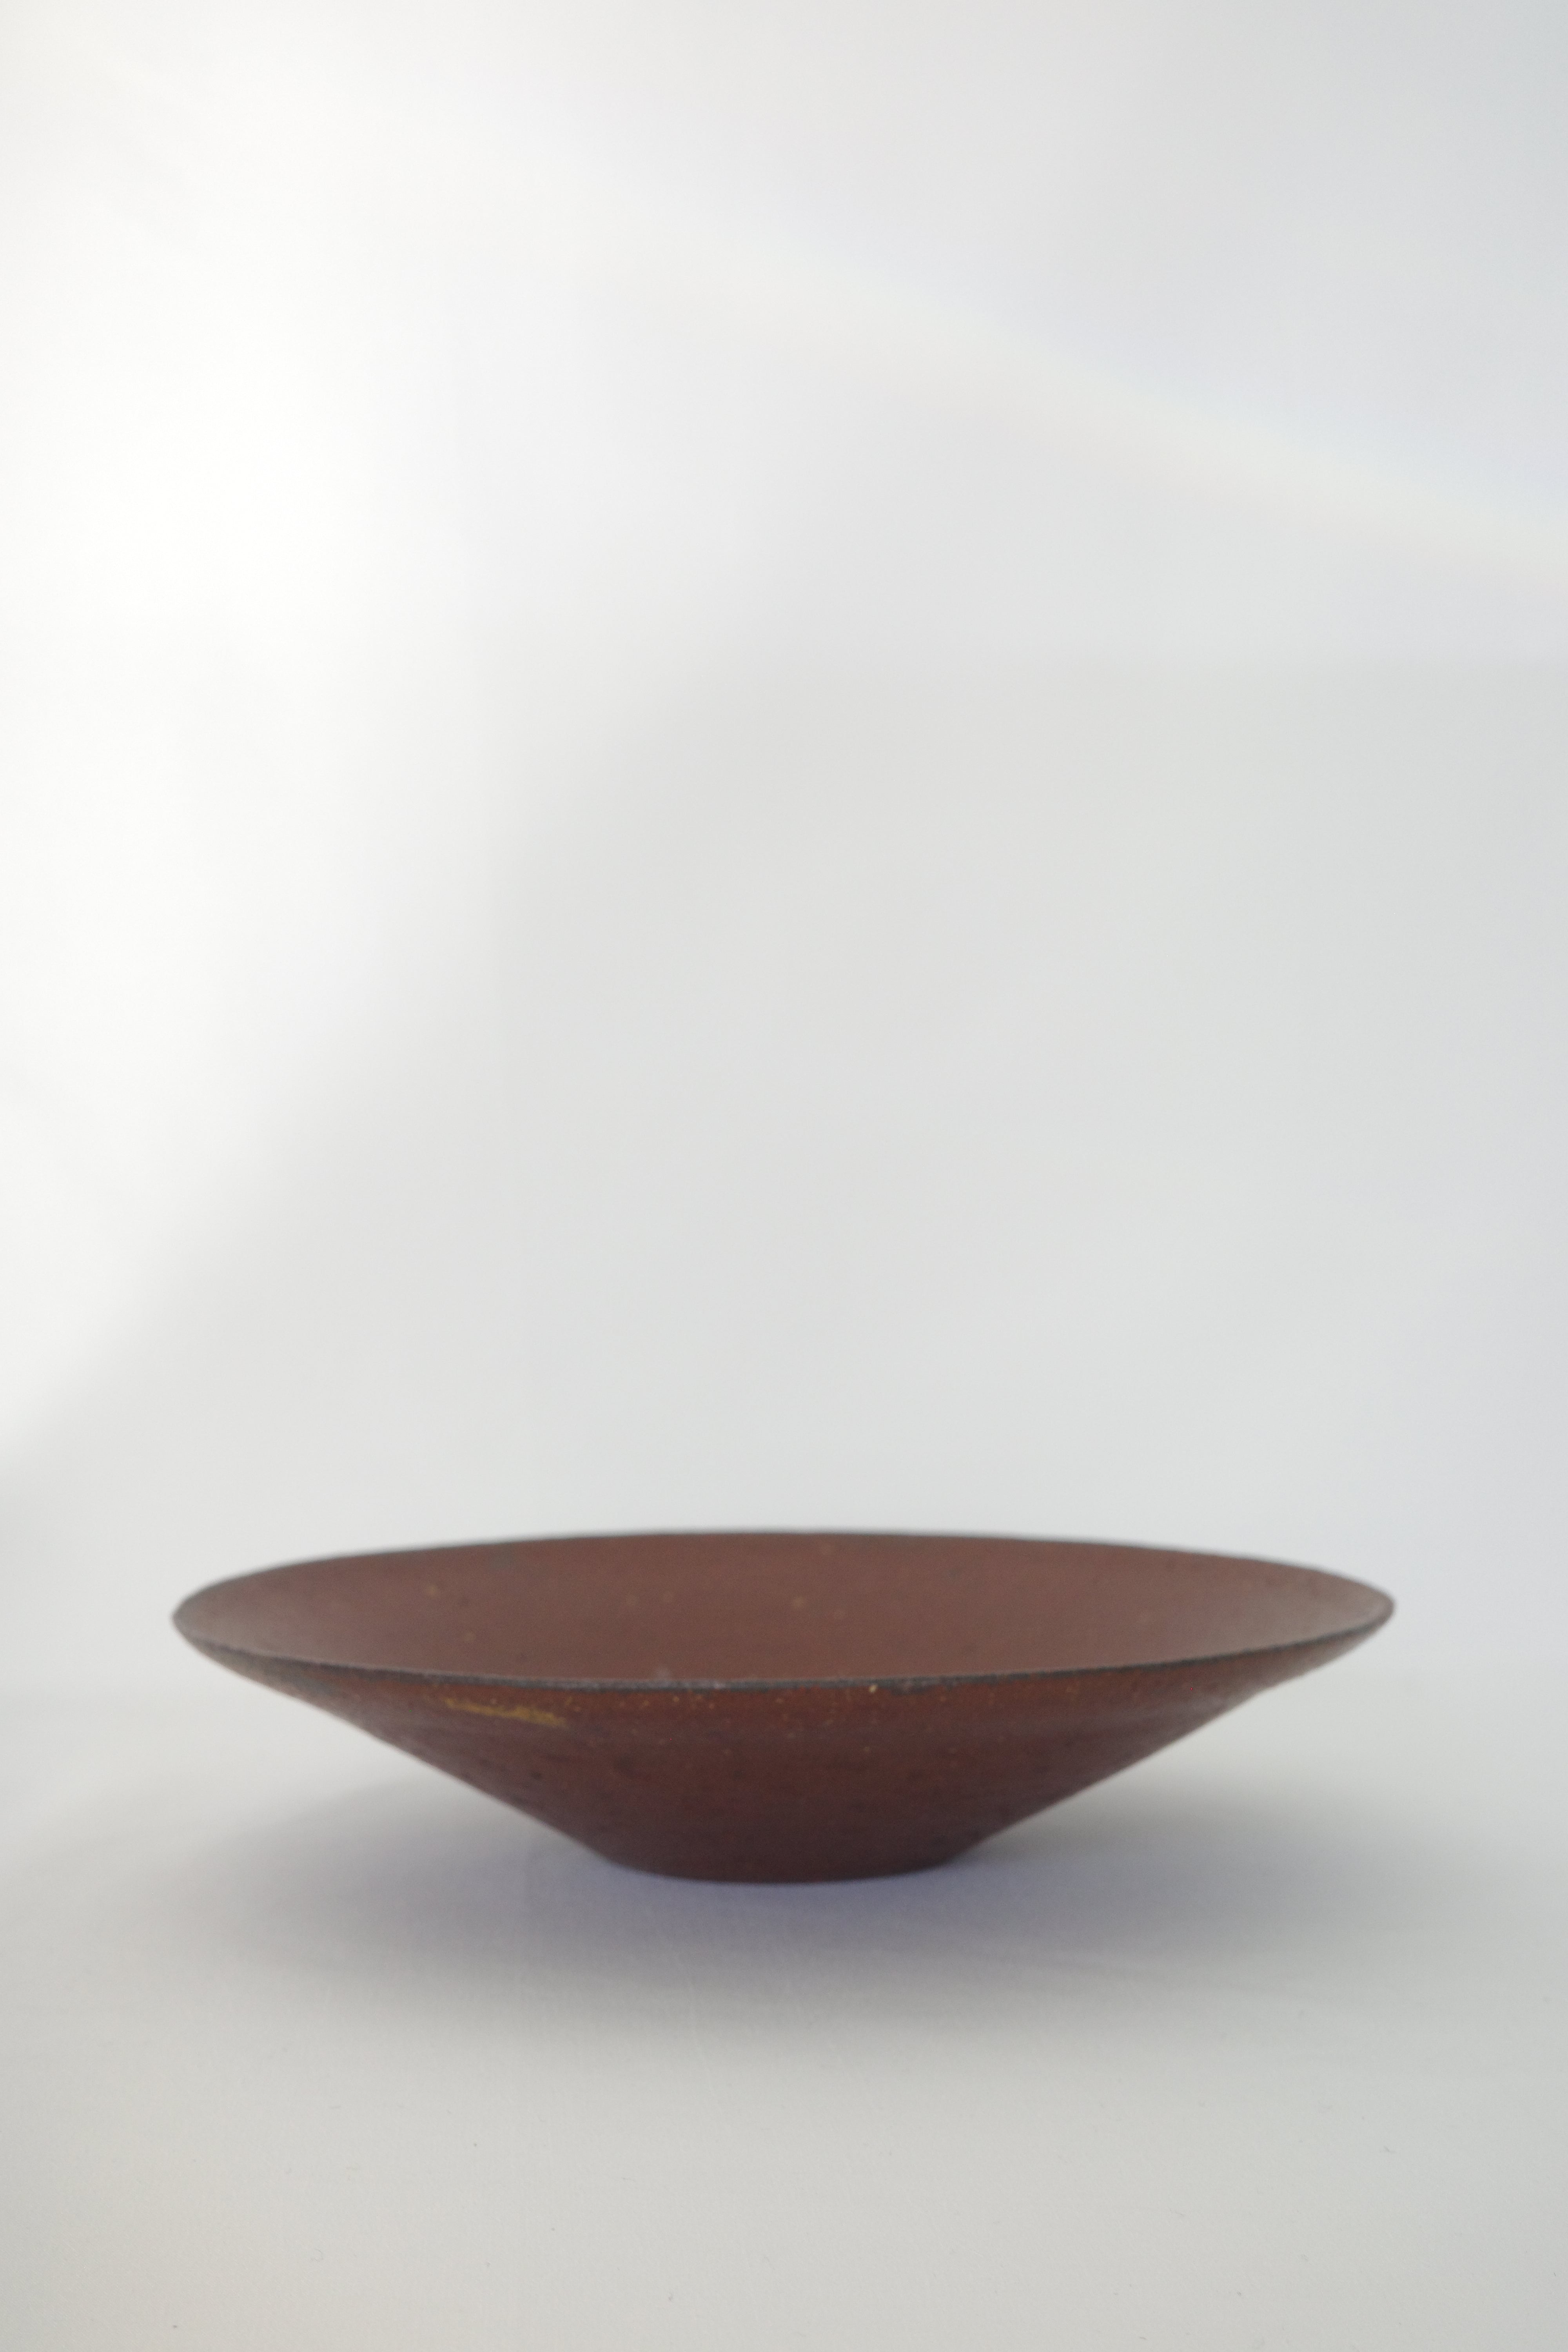 Medium bowl